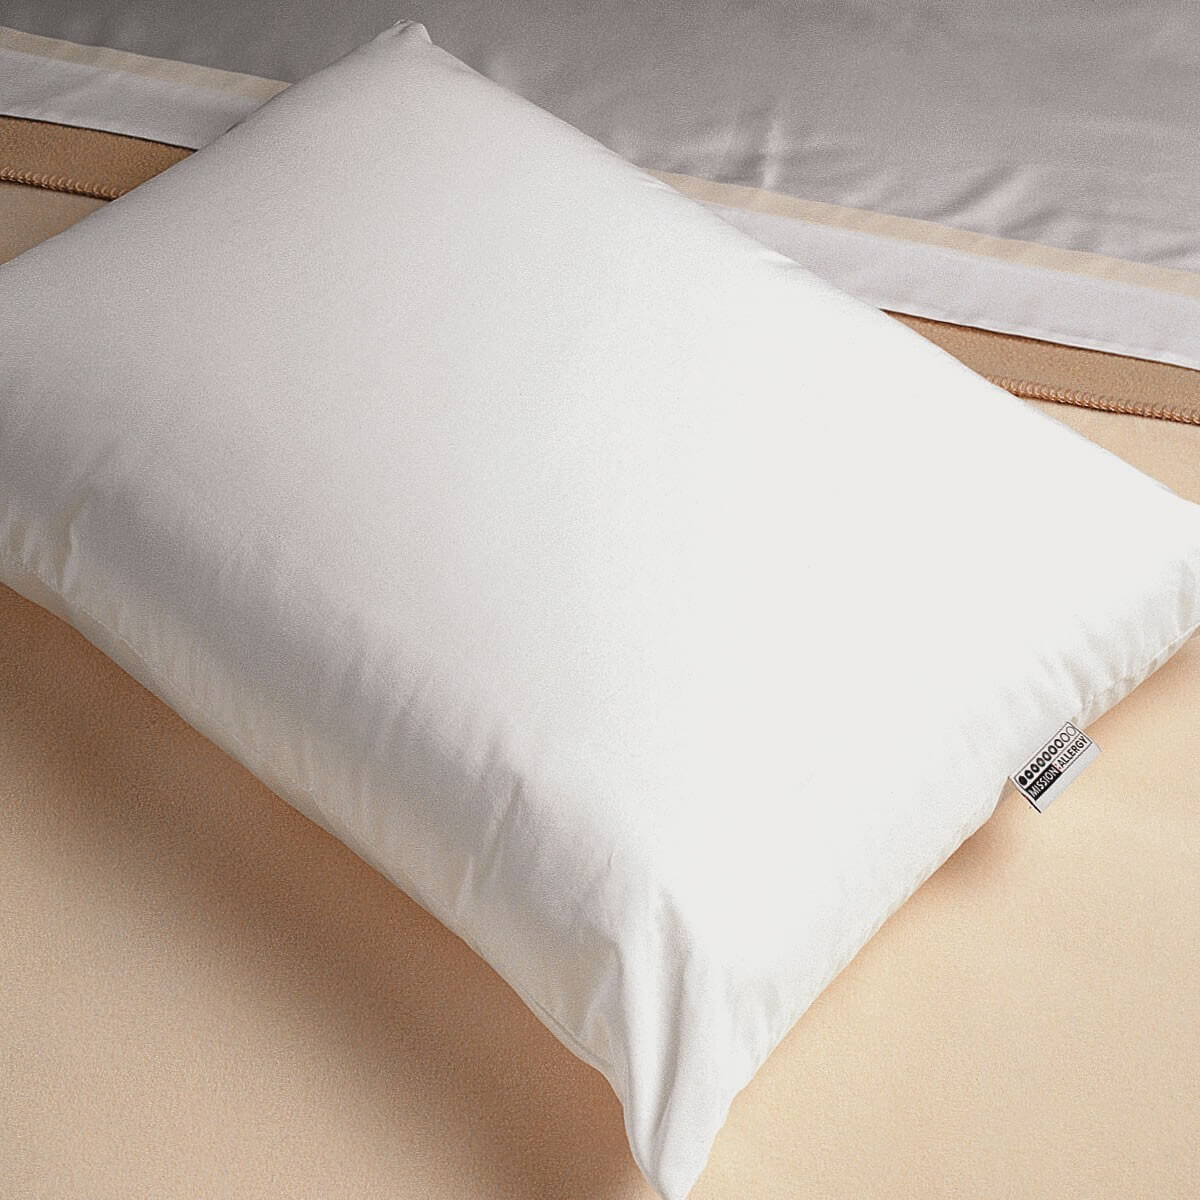 Allergen-Proof Pillows - White Goose Down